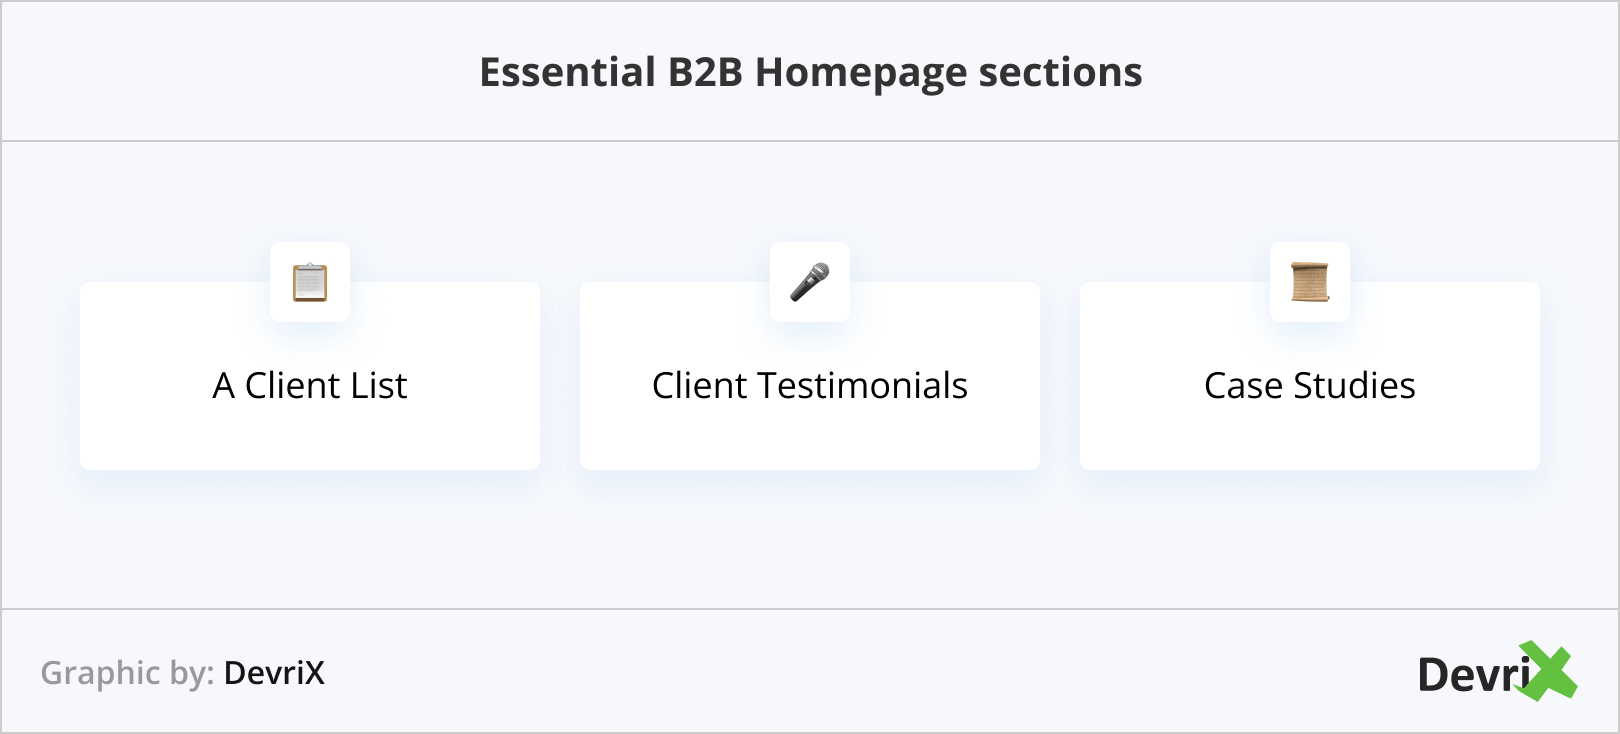 Essential B2B Homepage sections